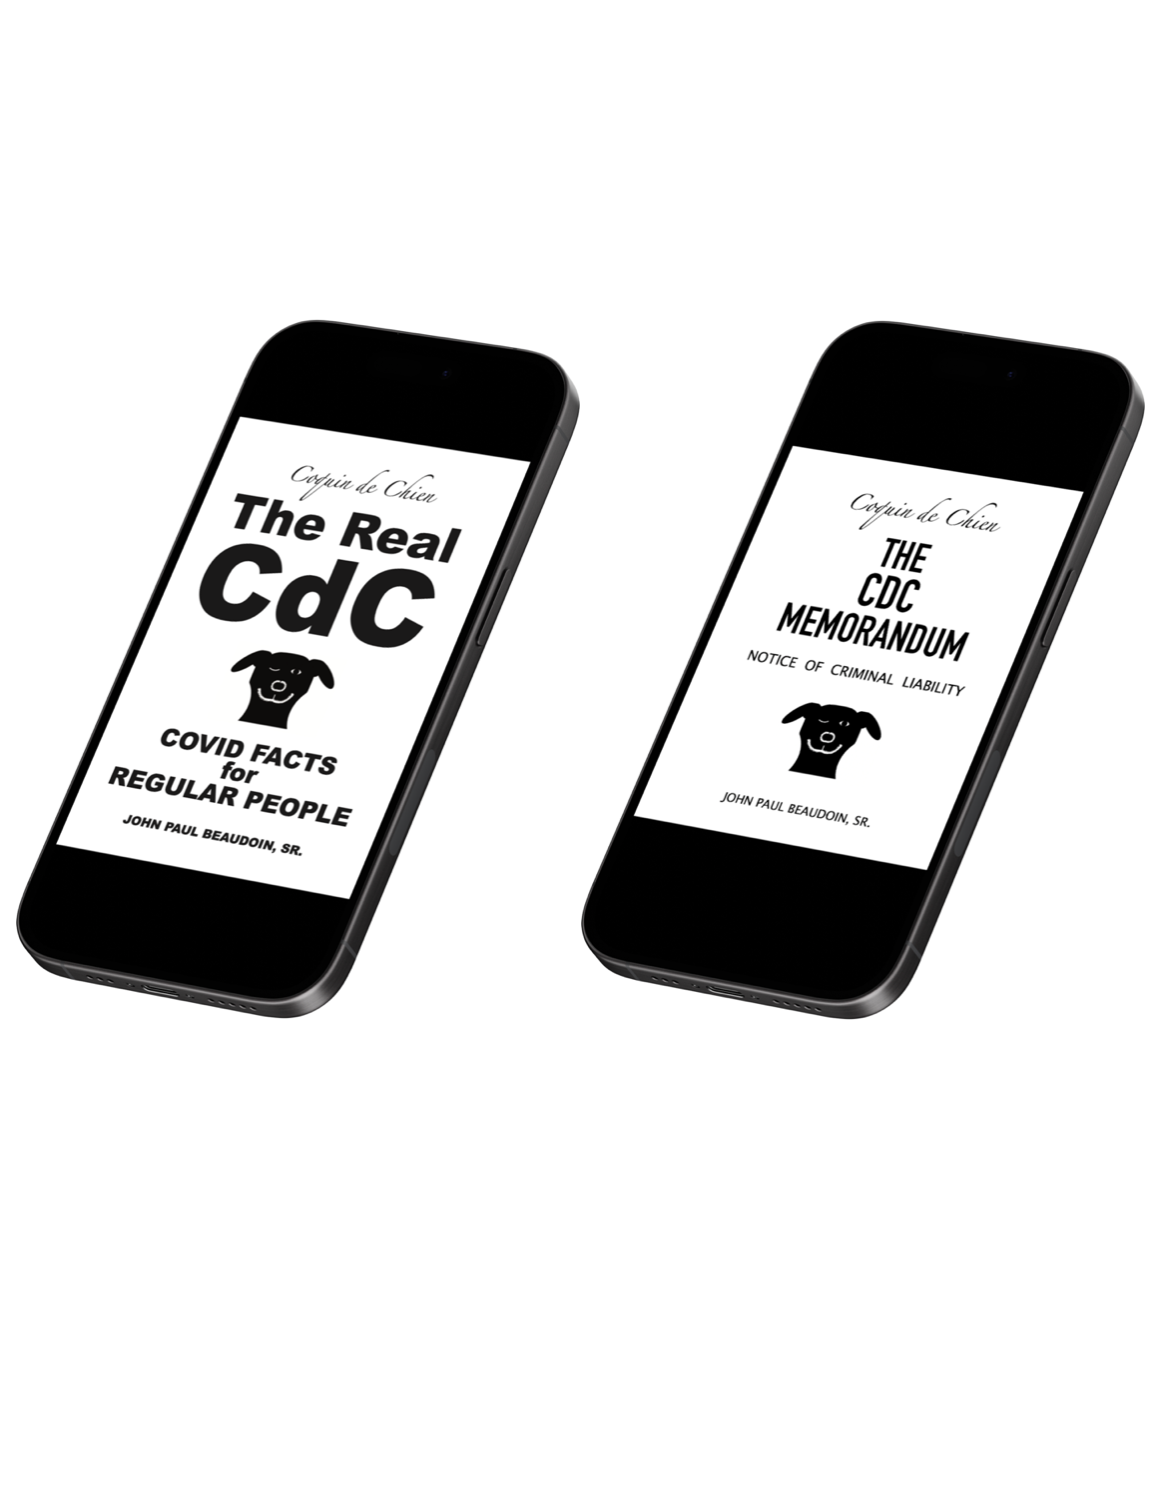 Ebook Bundle: The Real CdC & THE CDC MEMORANDUM